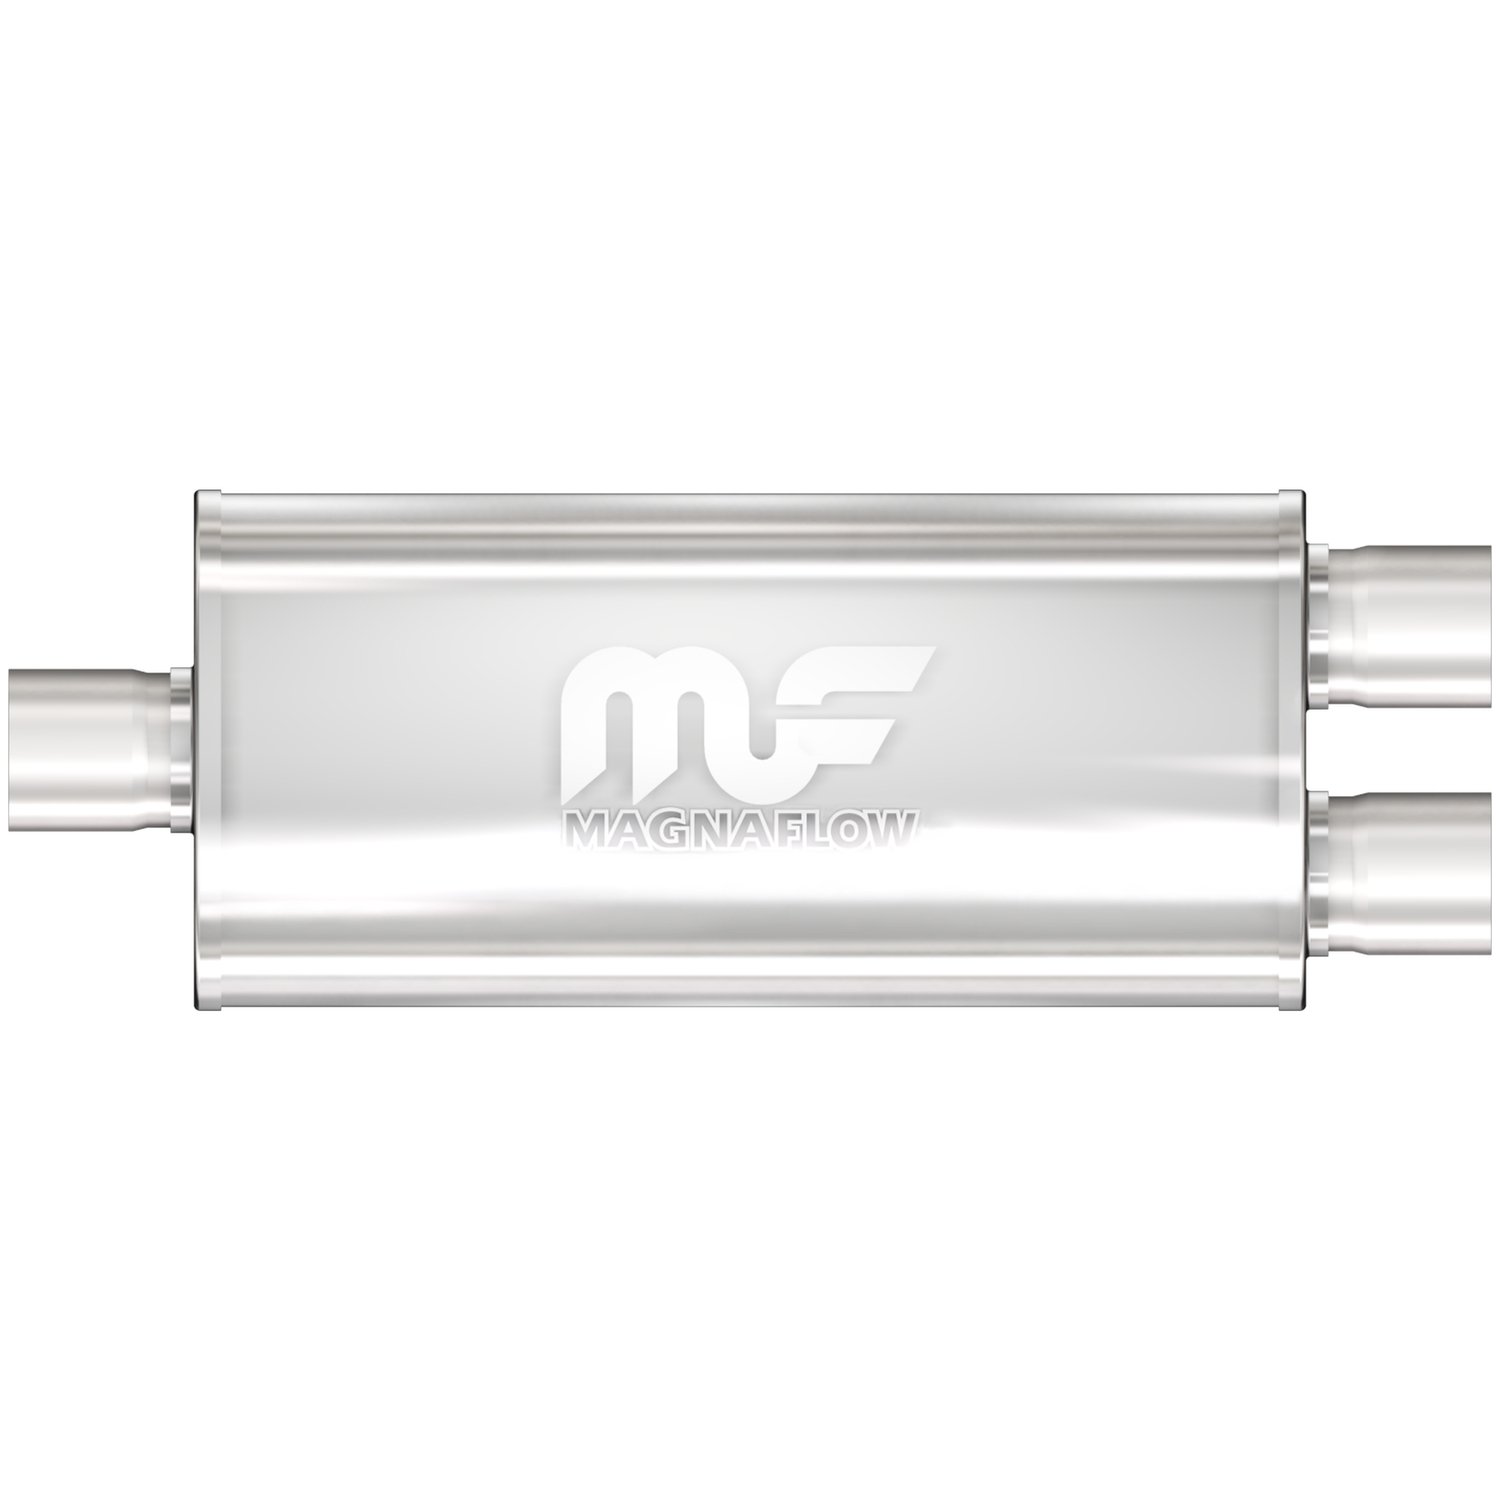 Magnaflow 12138 Exhaust Muffler 2.25 Single//Dual 5/" X 8/" Oval Straight-Through